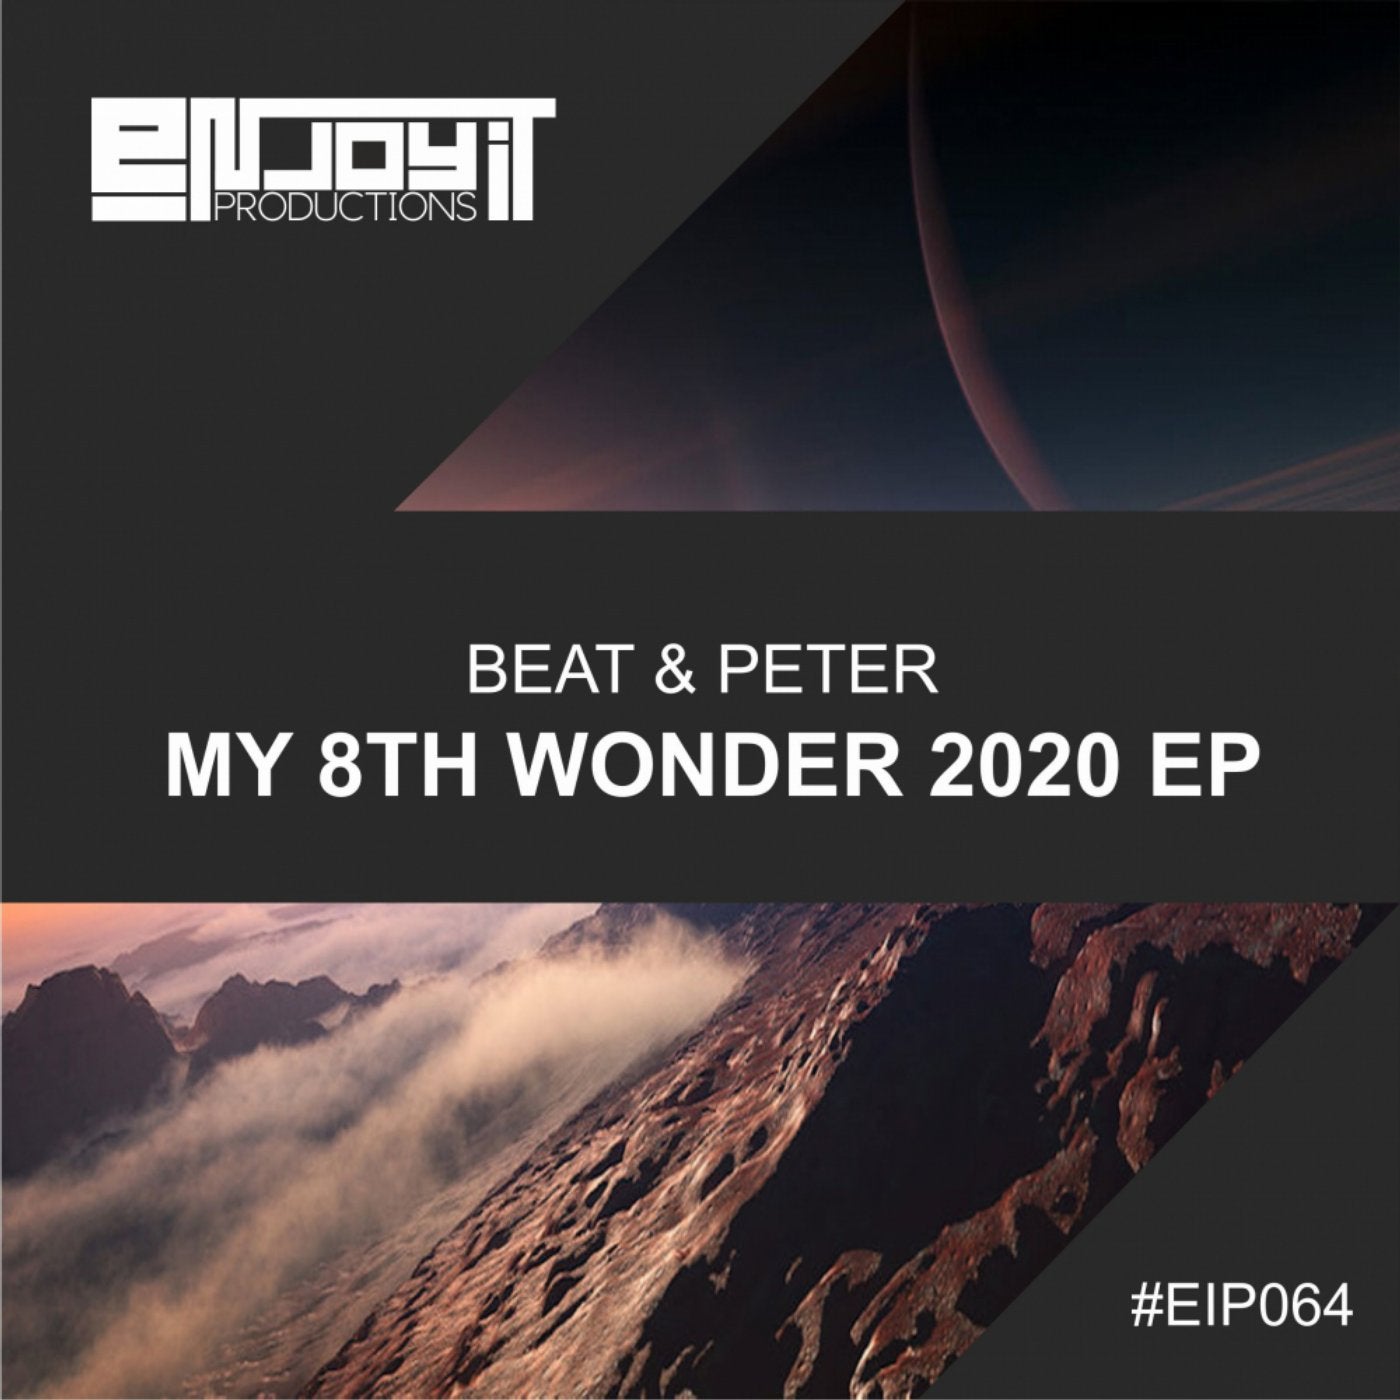 My 8th Wonder 2020 EP